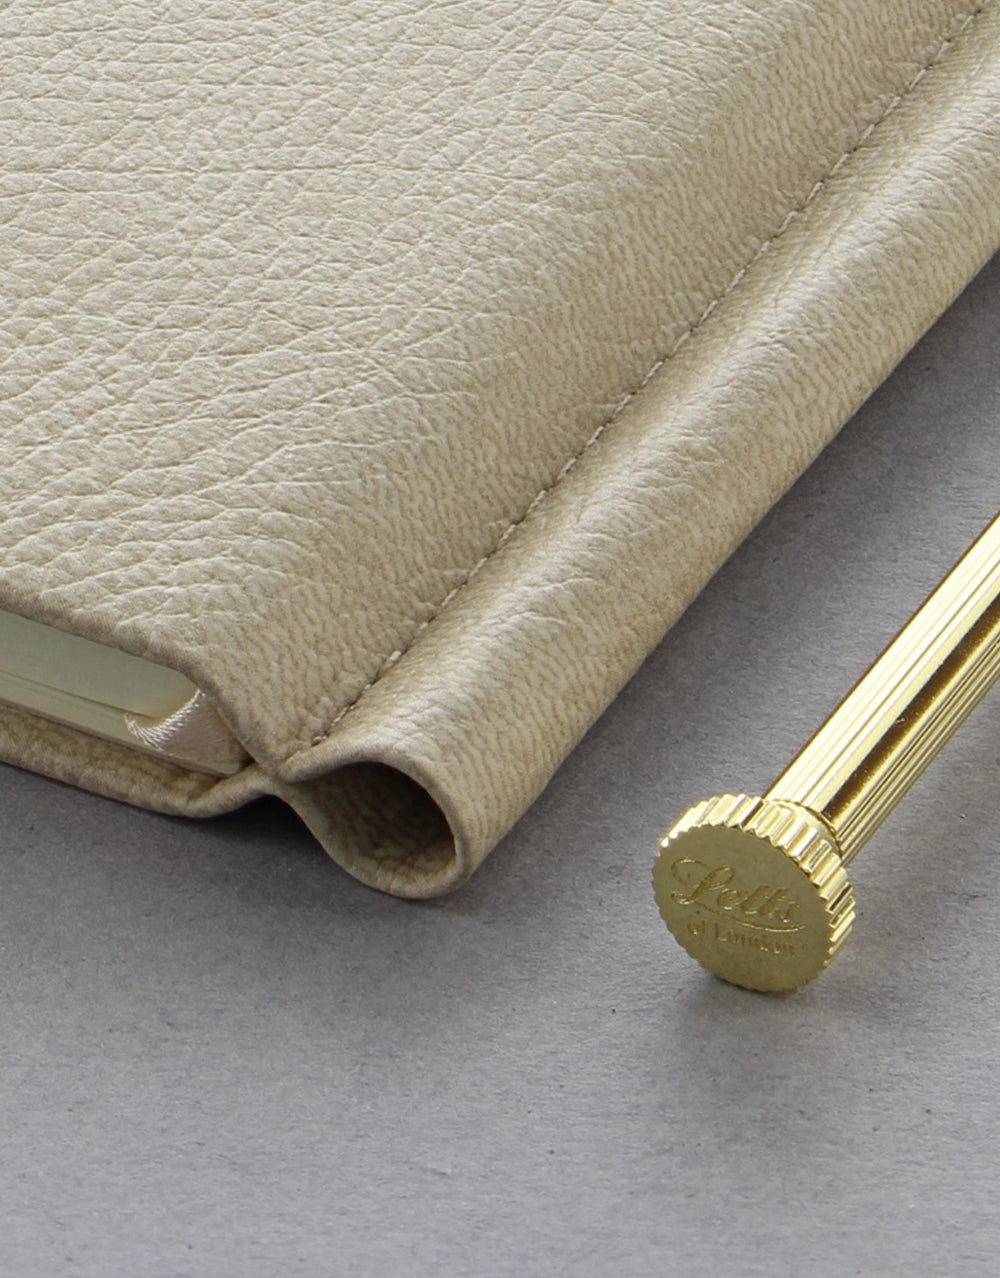 Origins Slim Pocket Ruled Notebook Stone#colour_stone